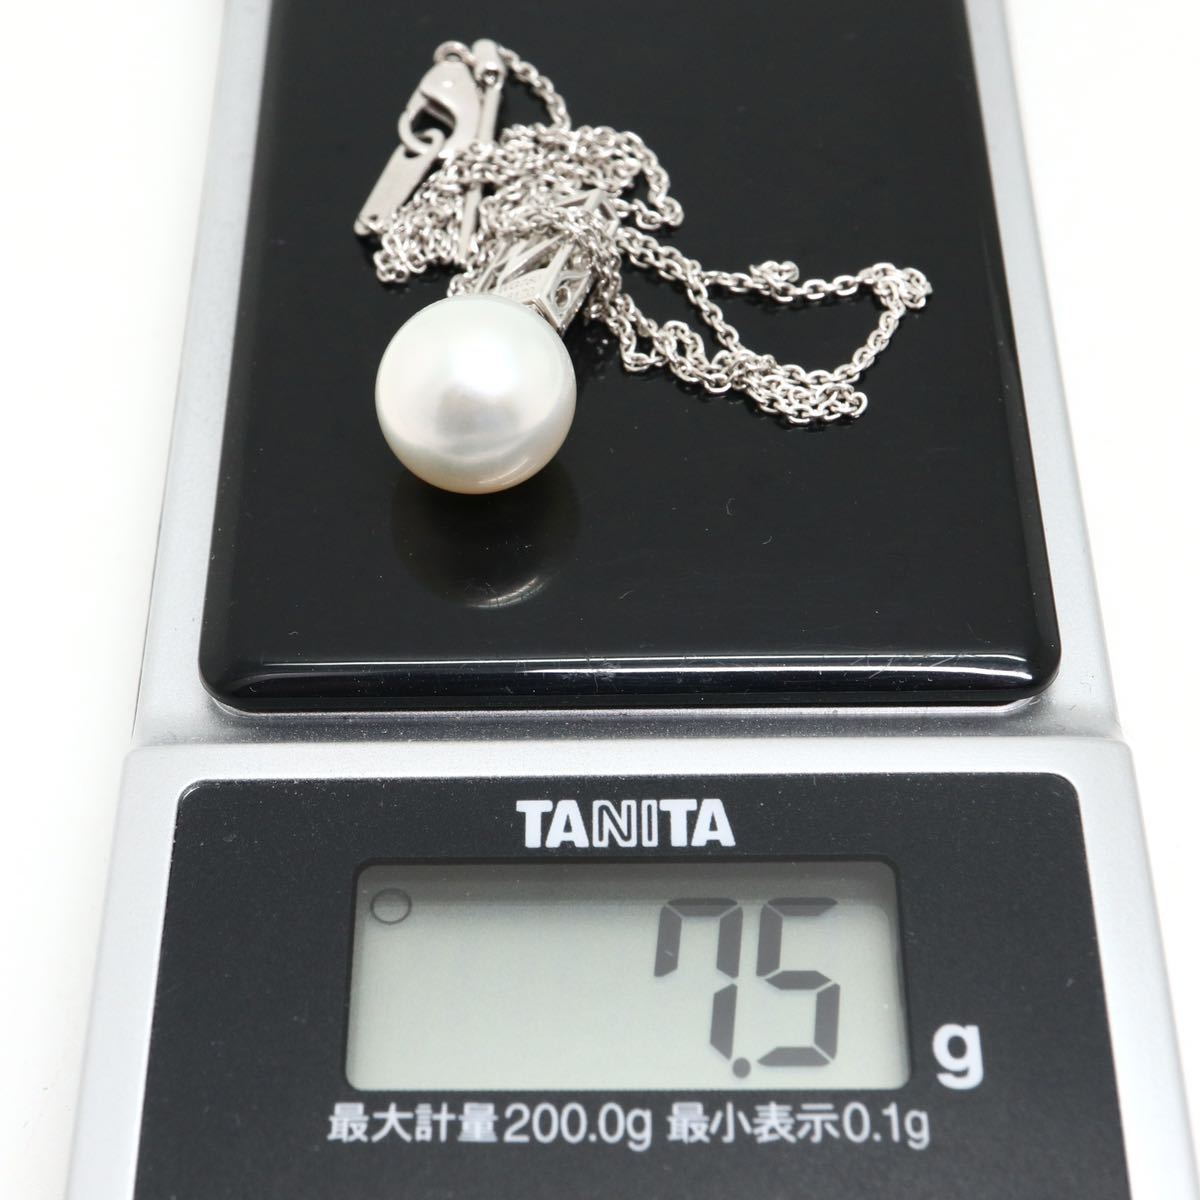 POLA jewelry(ポーラジュエリー)《K18WG天然ダイヤモンド付南洋白蝶真珠ネックレス》N 7.5g 45cm 11.5mm珠 pearl necklace jewelry ED9/EE7_画像10